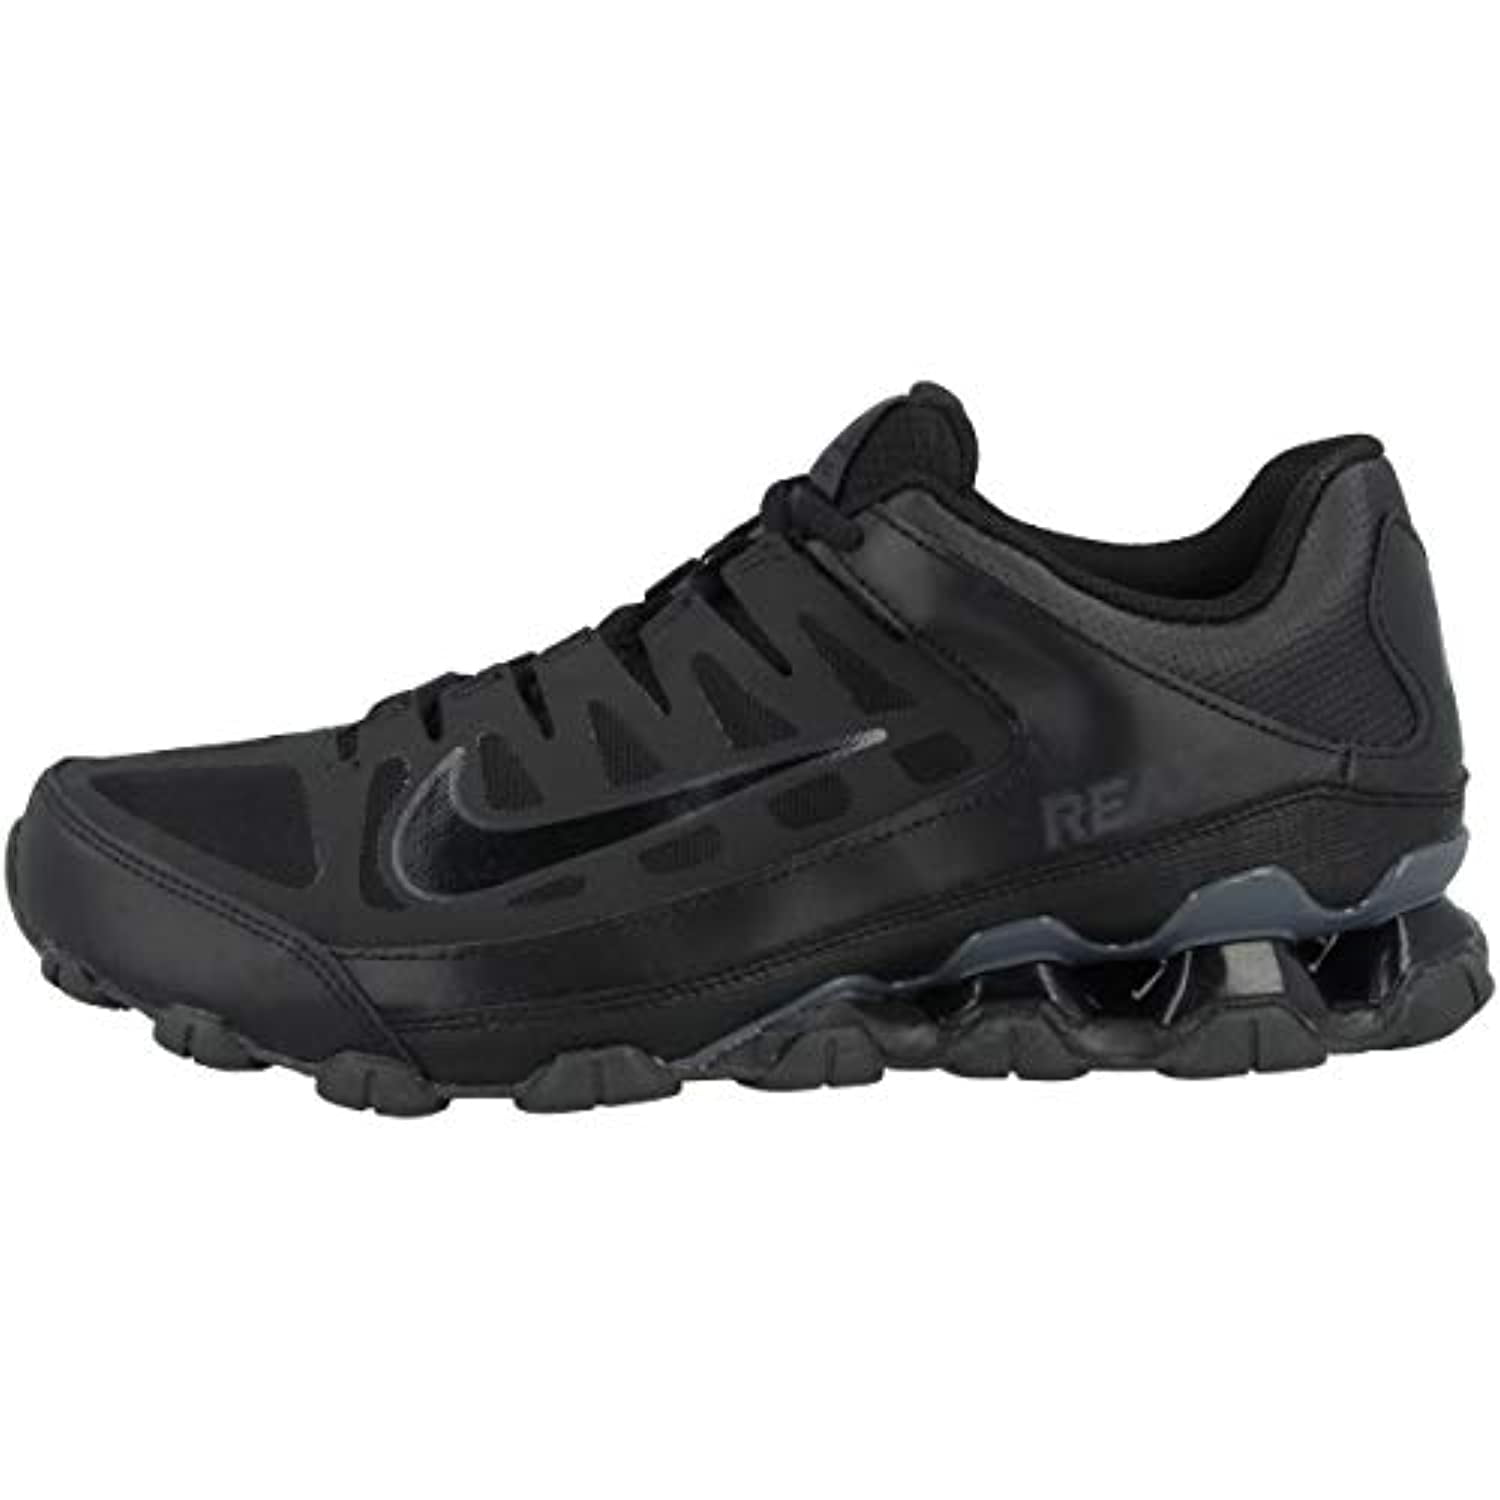 Nike Reax 8 Sports Shoes Men Black - 8.5 - Fitness/Training - Walmart.com